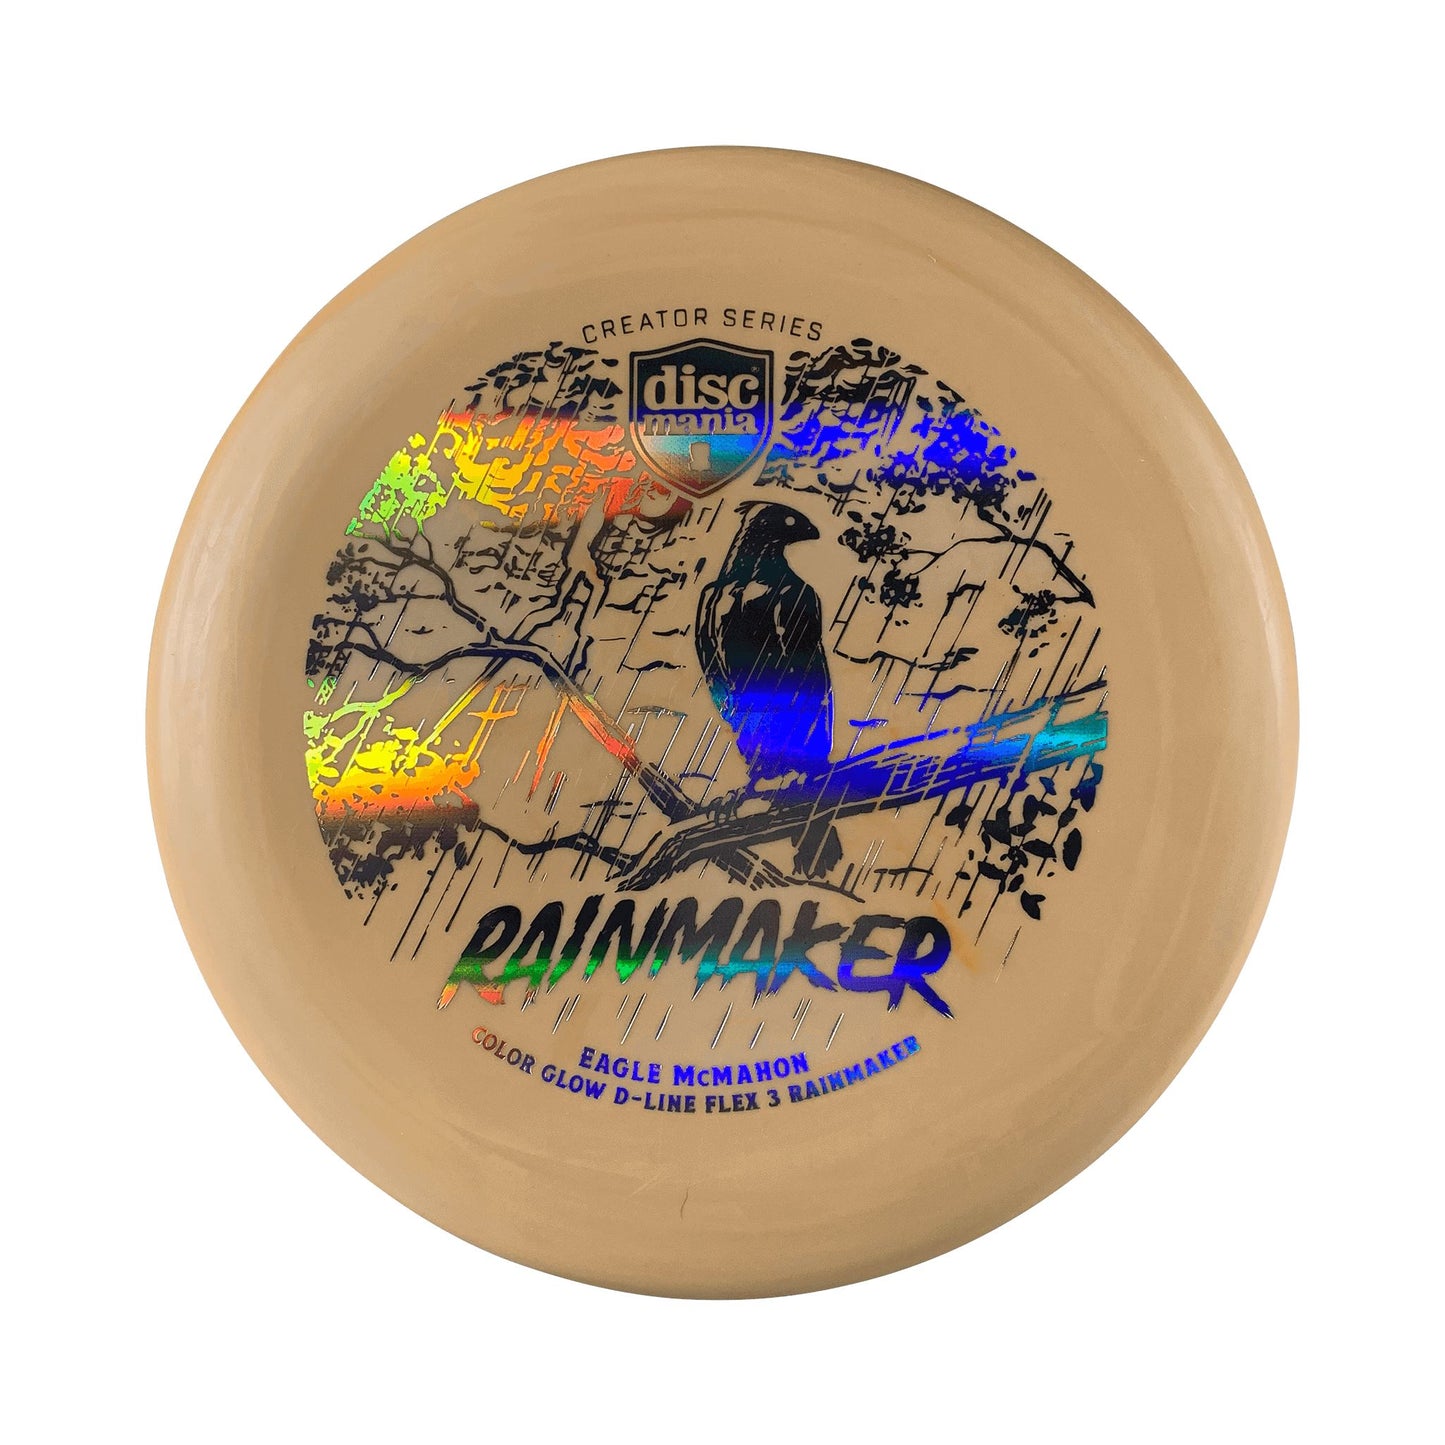 Color Glow D-Line (Flex 3) Rainmaker - Creator Series Eagle McMahon Disc Discmania light orange 173 